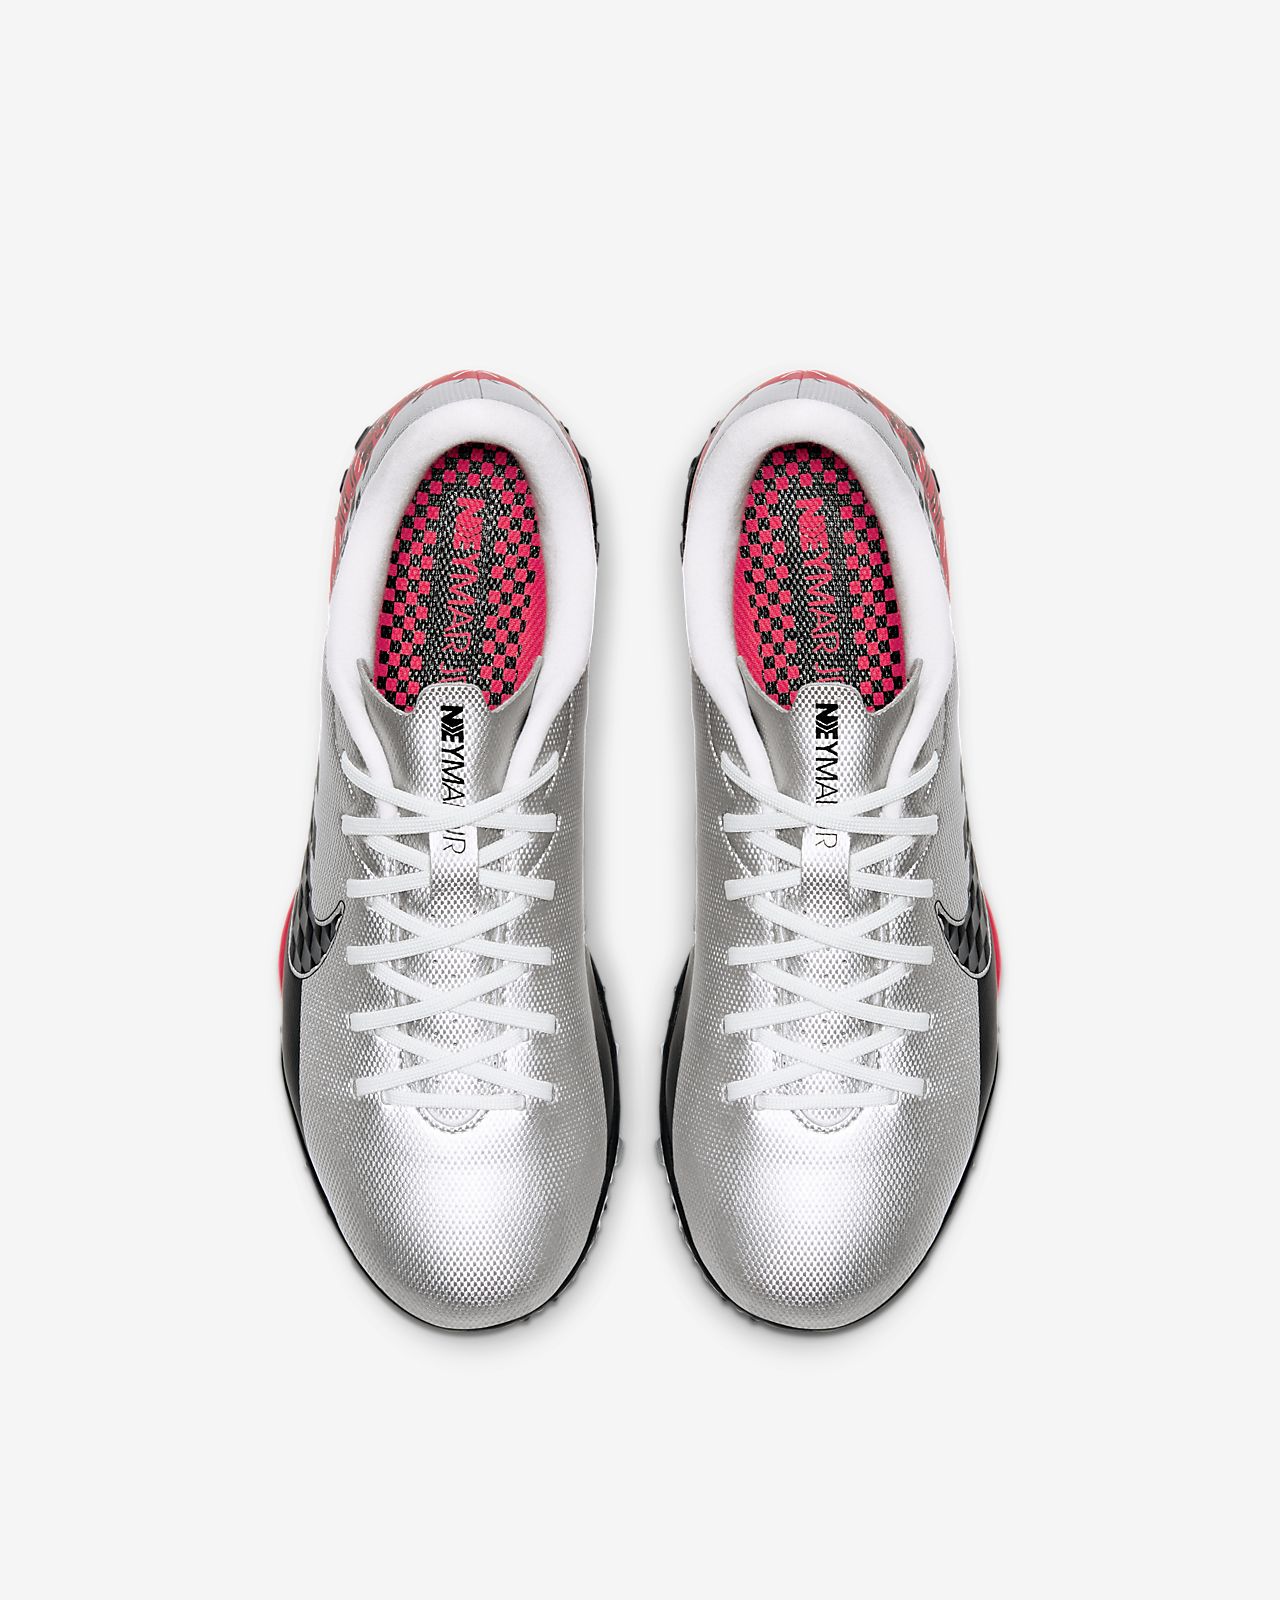 Chaussures de Football Nike Hypervenom Phantom III DF